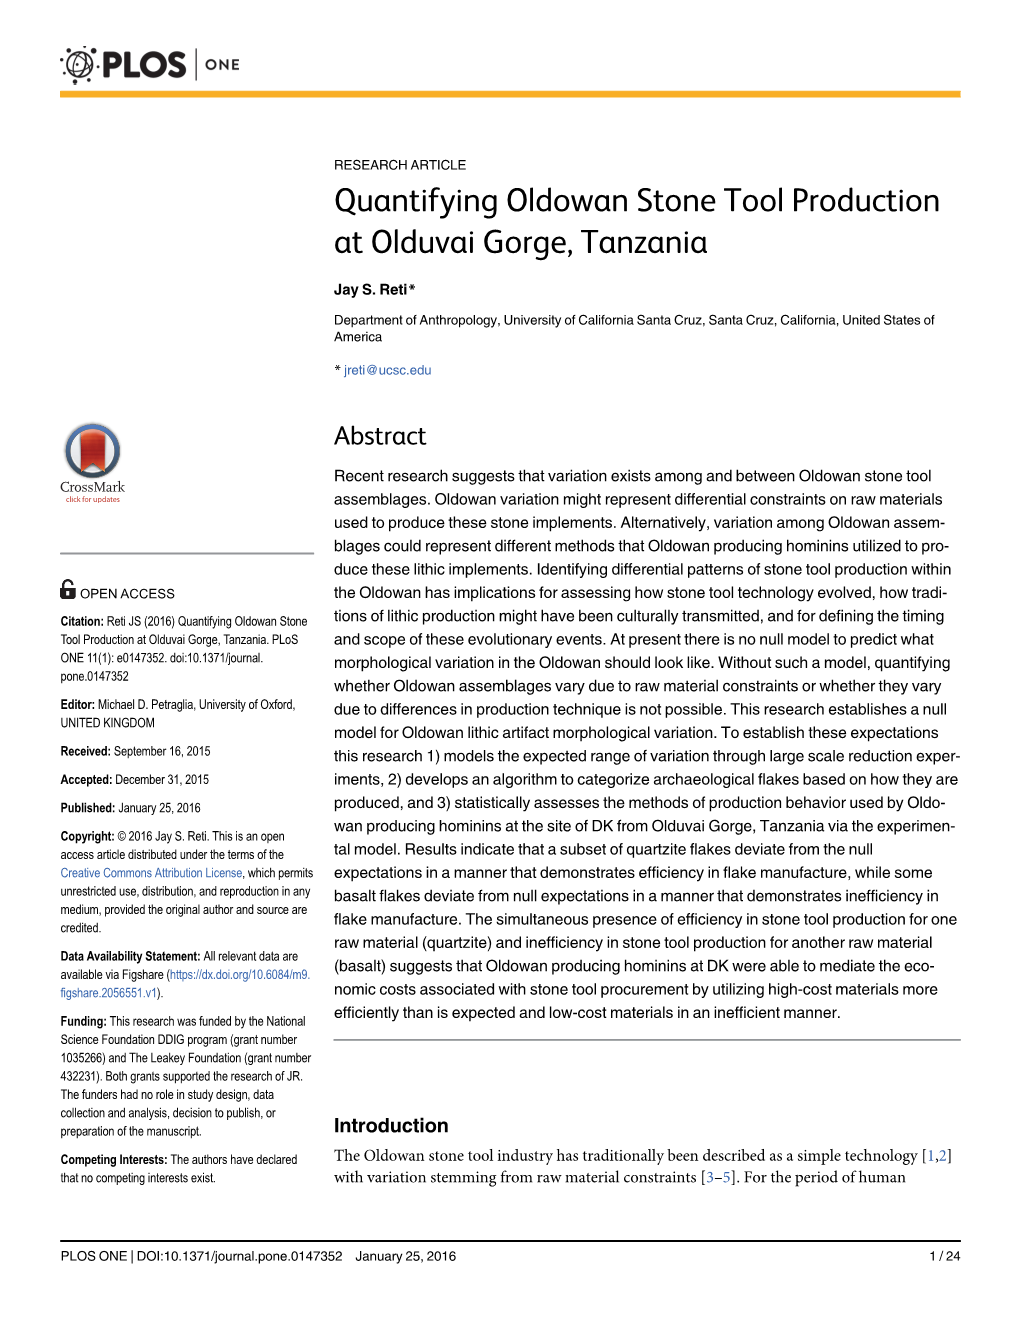 Quantifying Oldowan Stone Tool Production at Olduvai Gorge, Tanzania